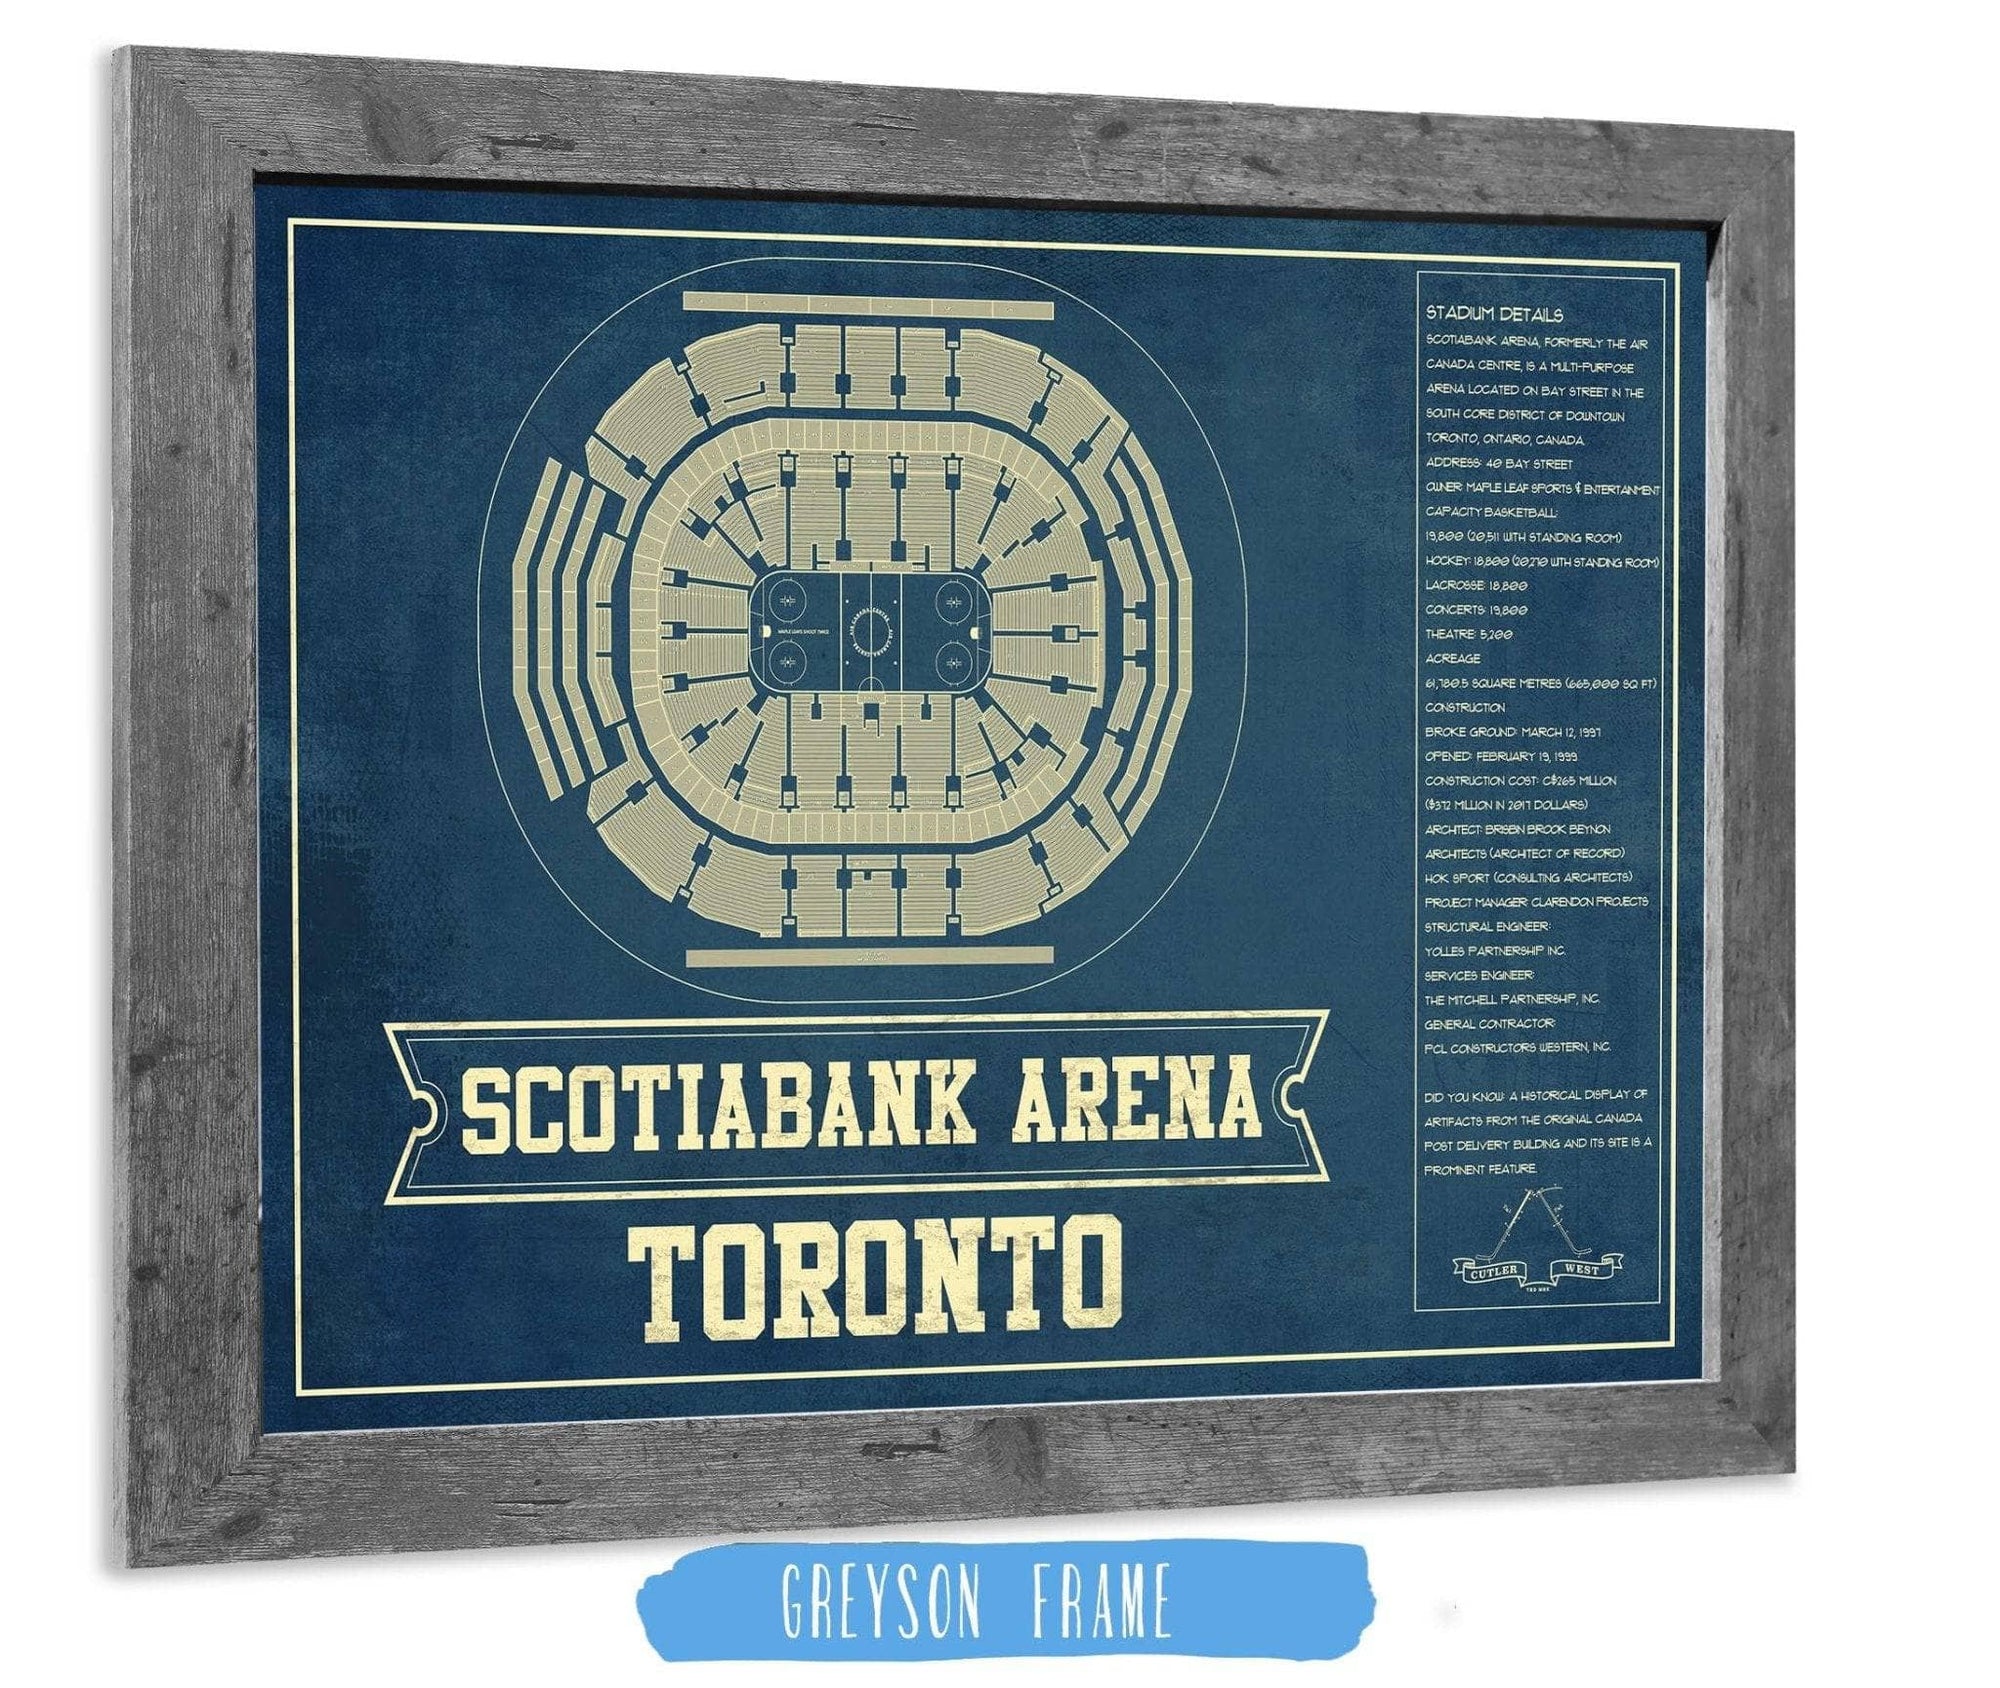 Cutler West 14" x 11" / Greyson Frame Toronto Maple Leafs - Scotiabank Arena Vintage Hockey Blueprint NHL Print 137553